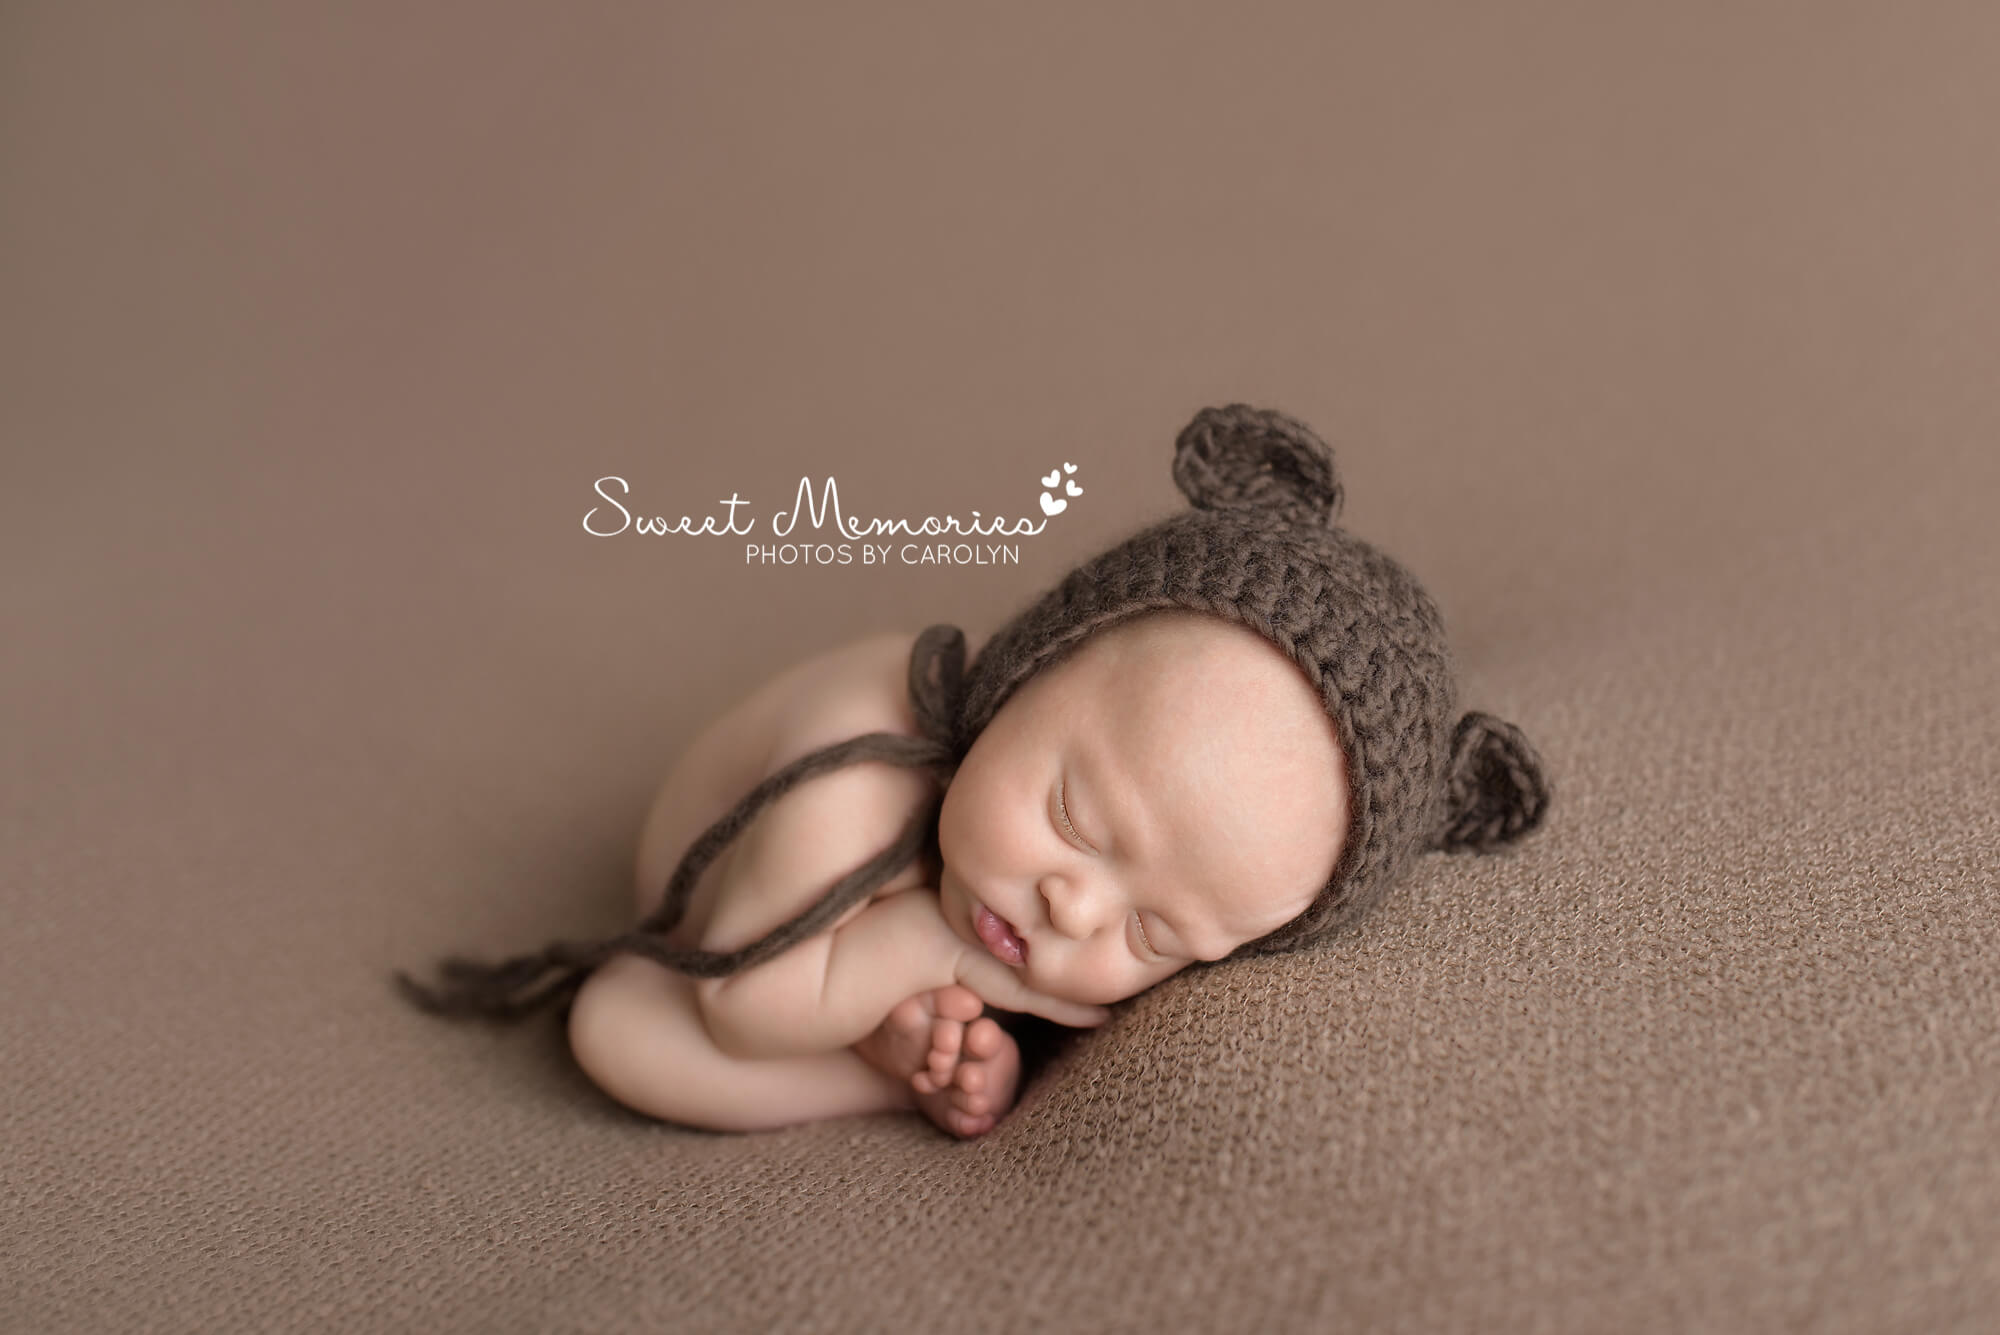 newborn baby boy in taco pose with brown bear hat | Warrington, PA newborn photographer | Sweet Memories Photos by Carolyn, Quakertown Pennsylvania